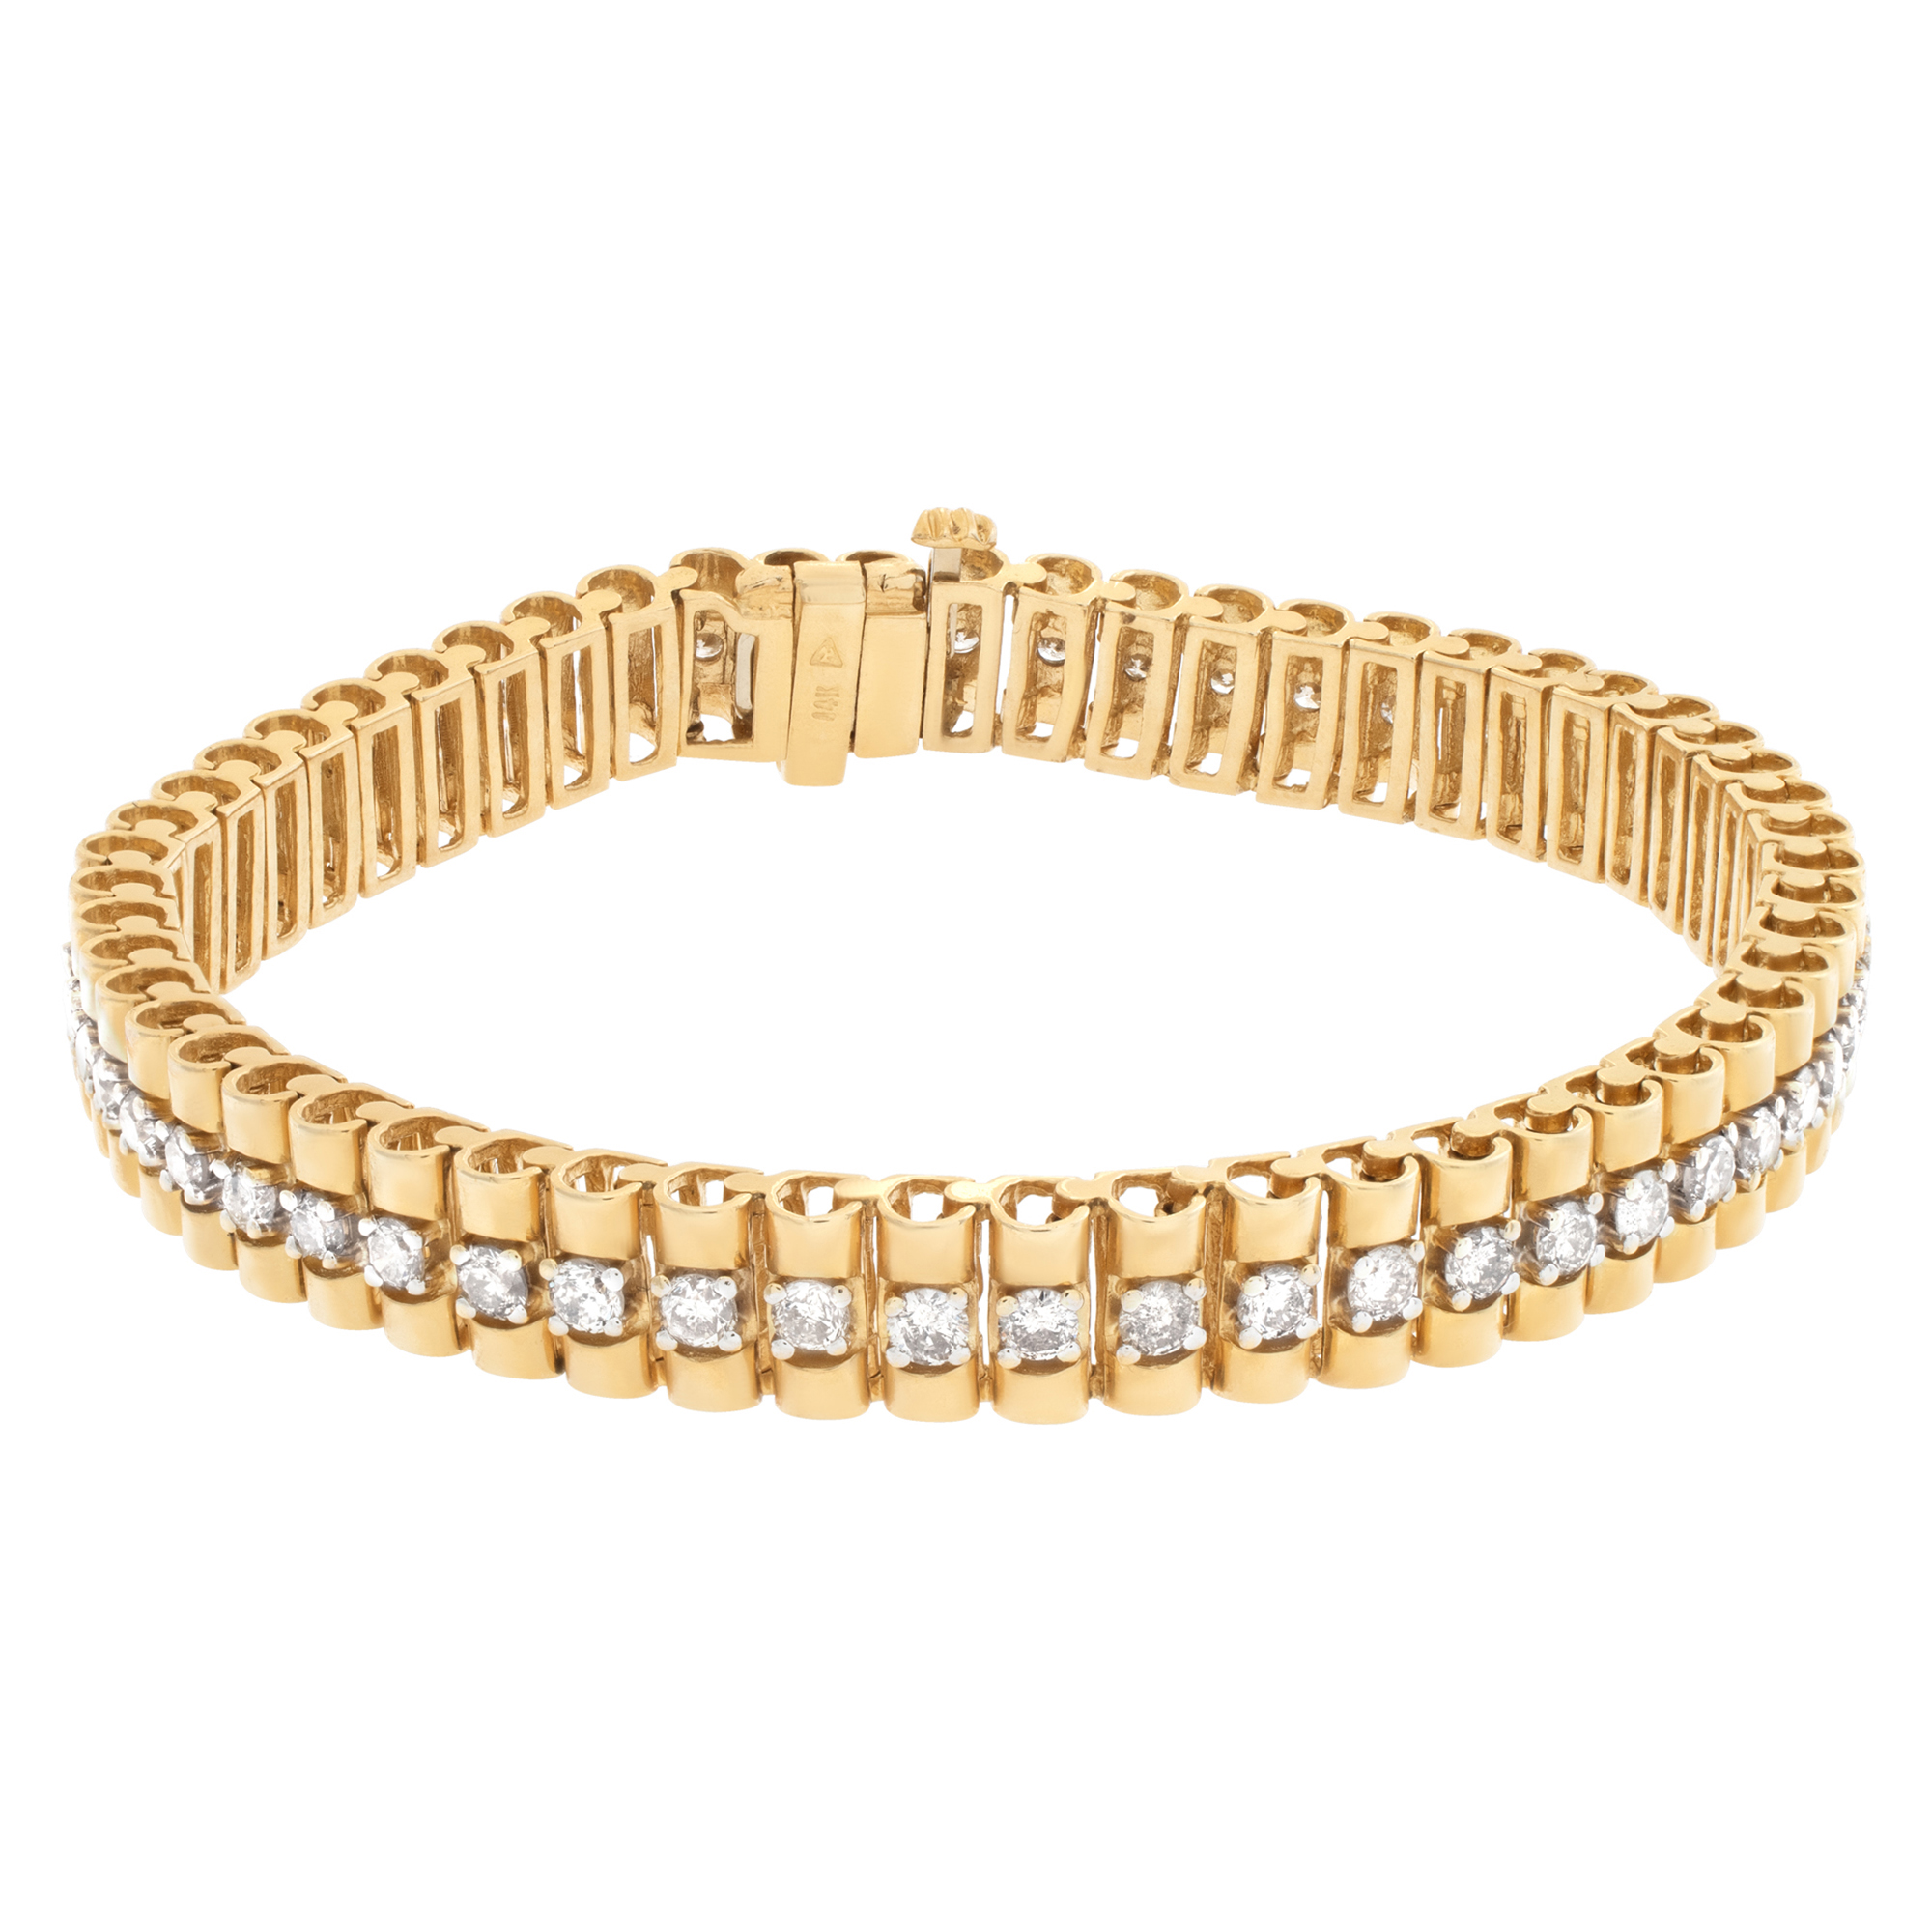 Stylish president style link bracelet with approximately 3 carats full cut round brilliant diamonds set in 14k yellow gold image 1